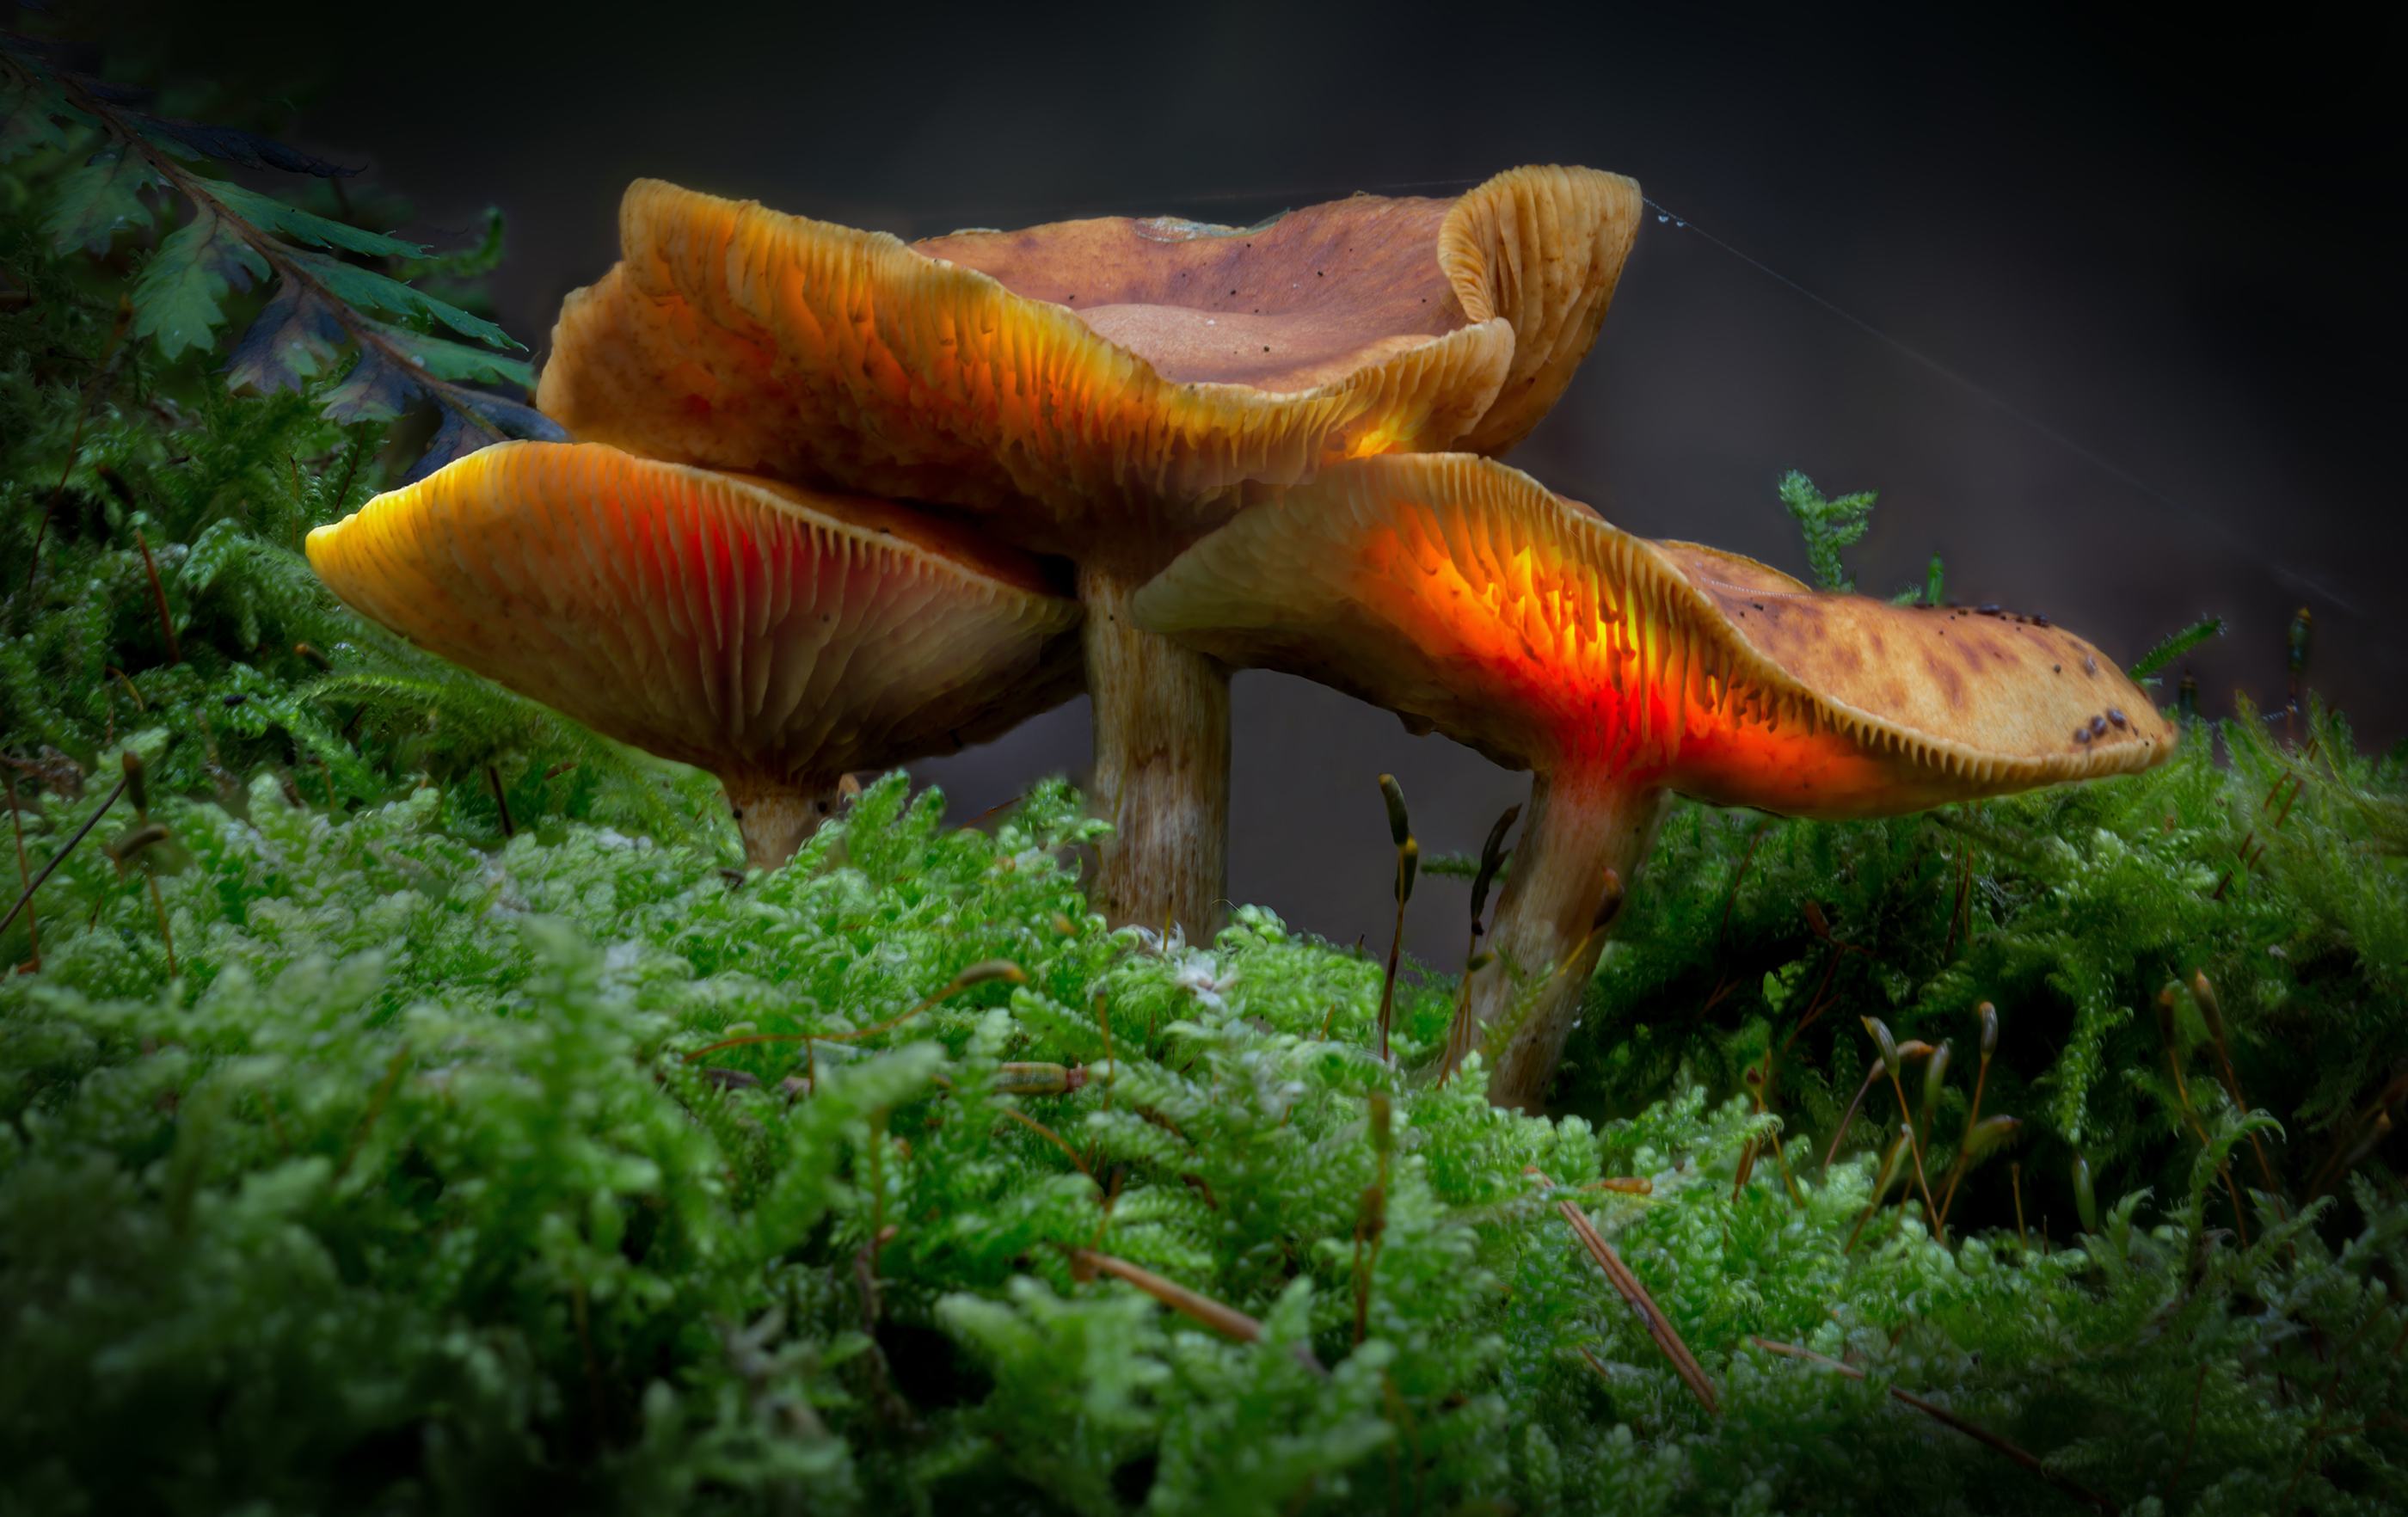 Mushroom glowing